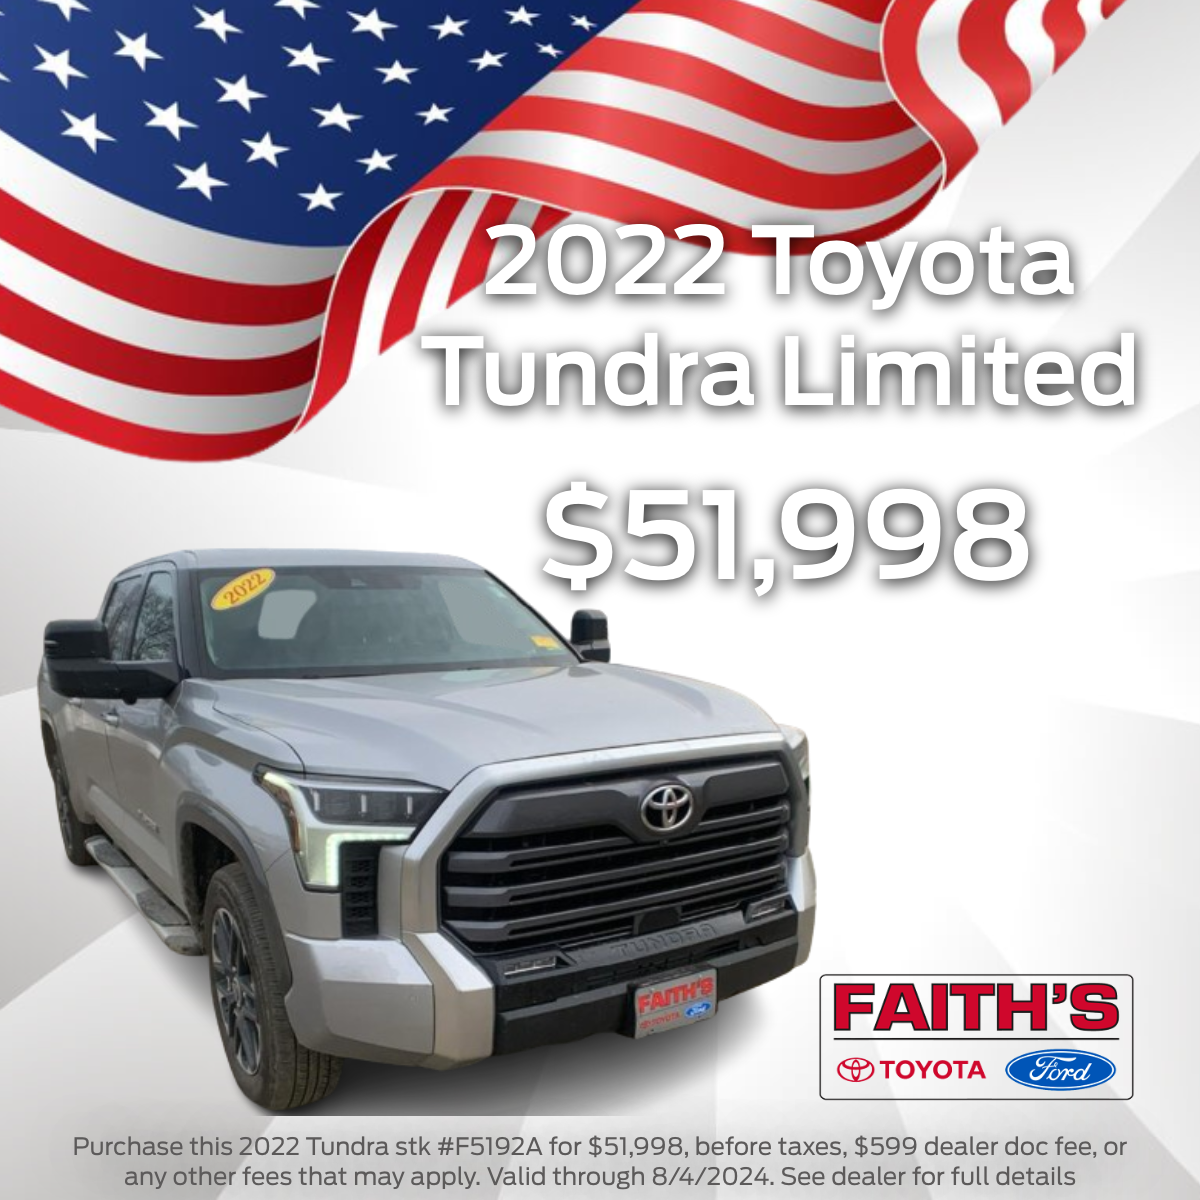 2022 Toyota Tundra Purchase Offer | Faith's Toyota